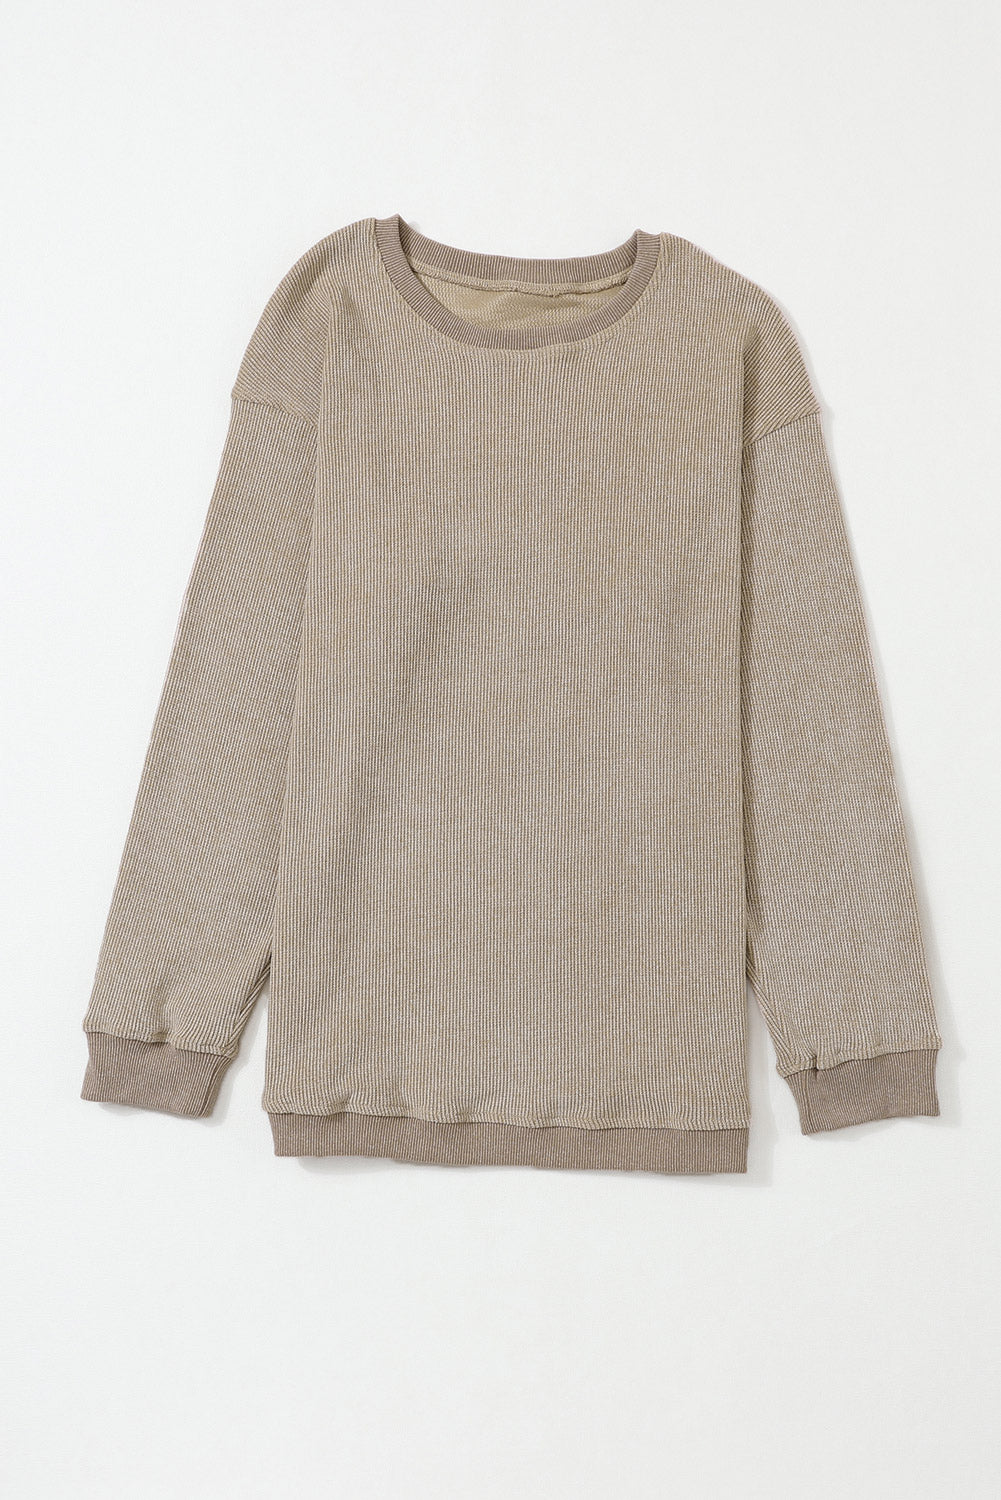 Khaki Solid Ribbed Knit Round Neck Pullover Sweatshirt - SELFTRITSS